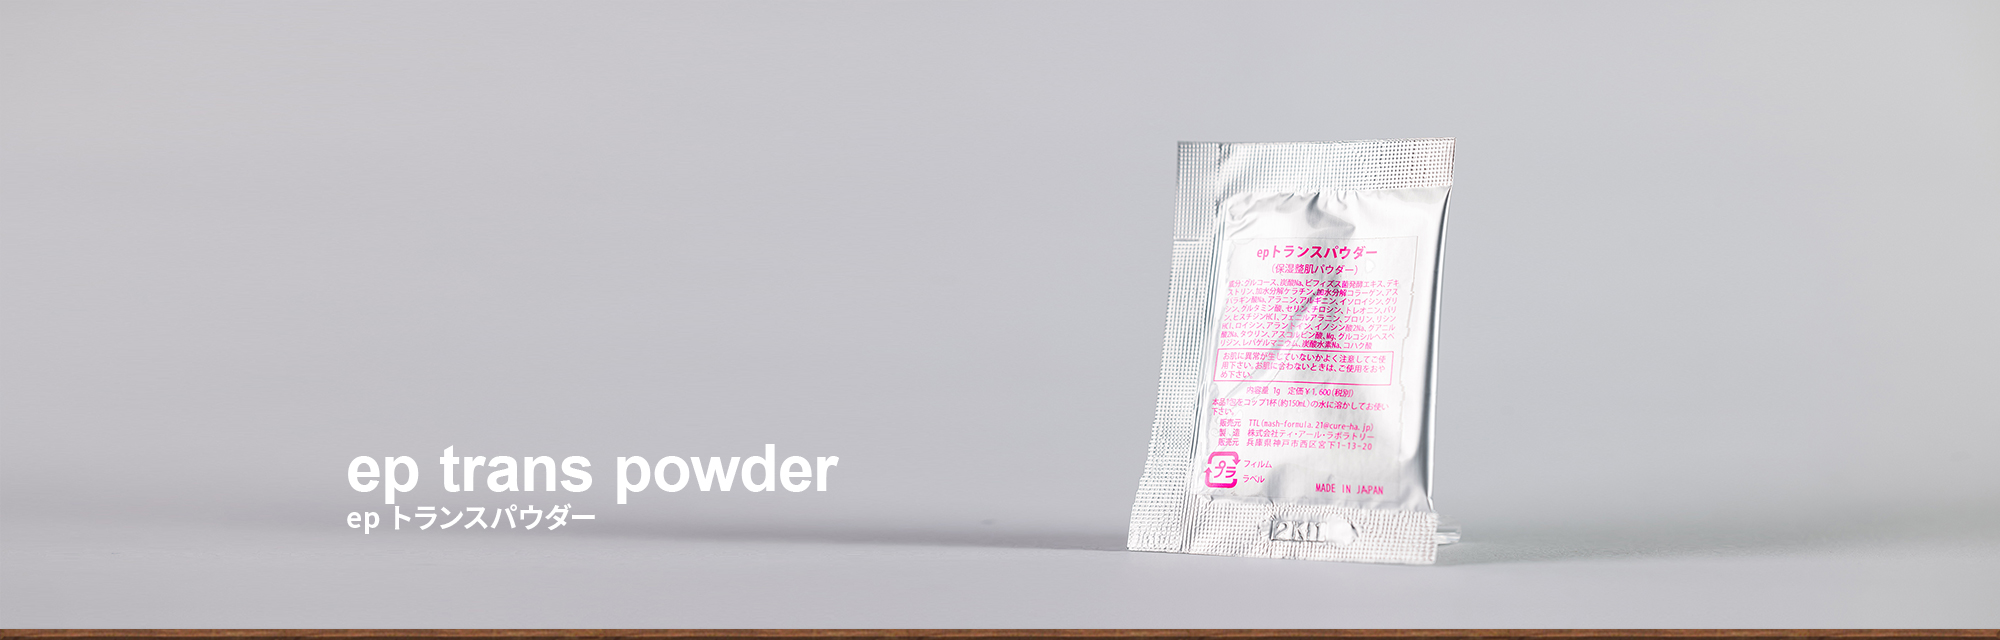 ep trans powder